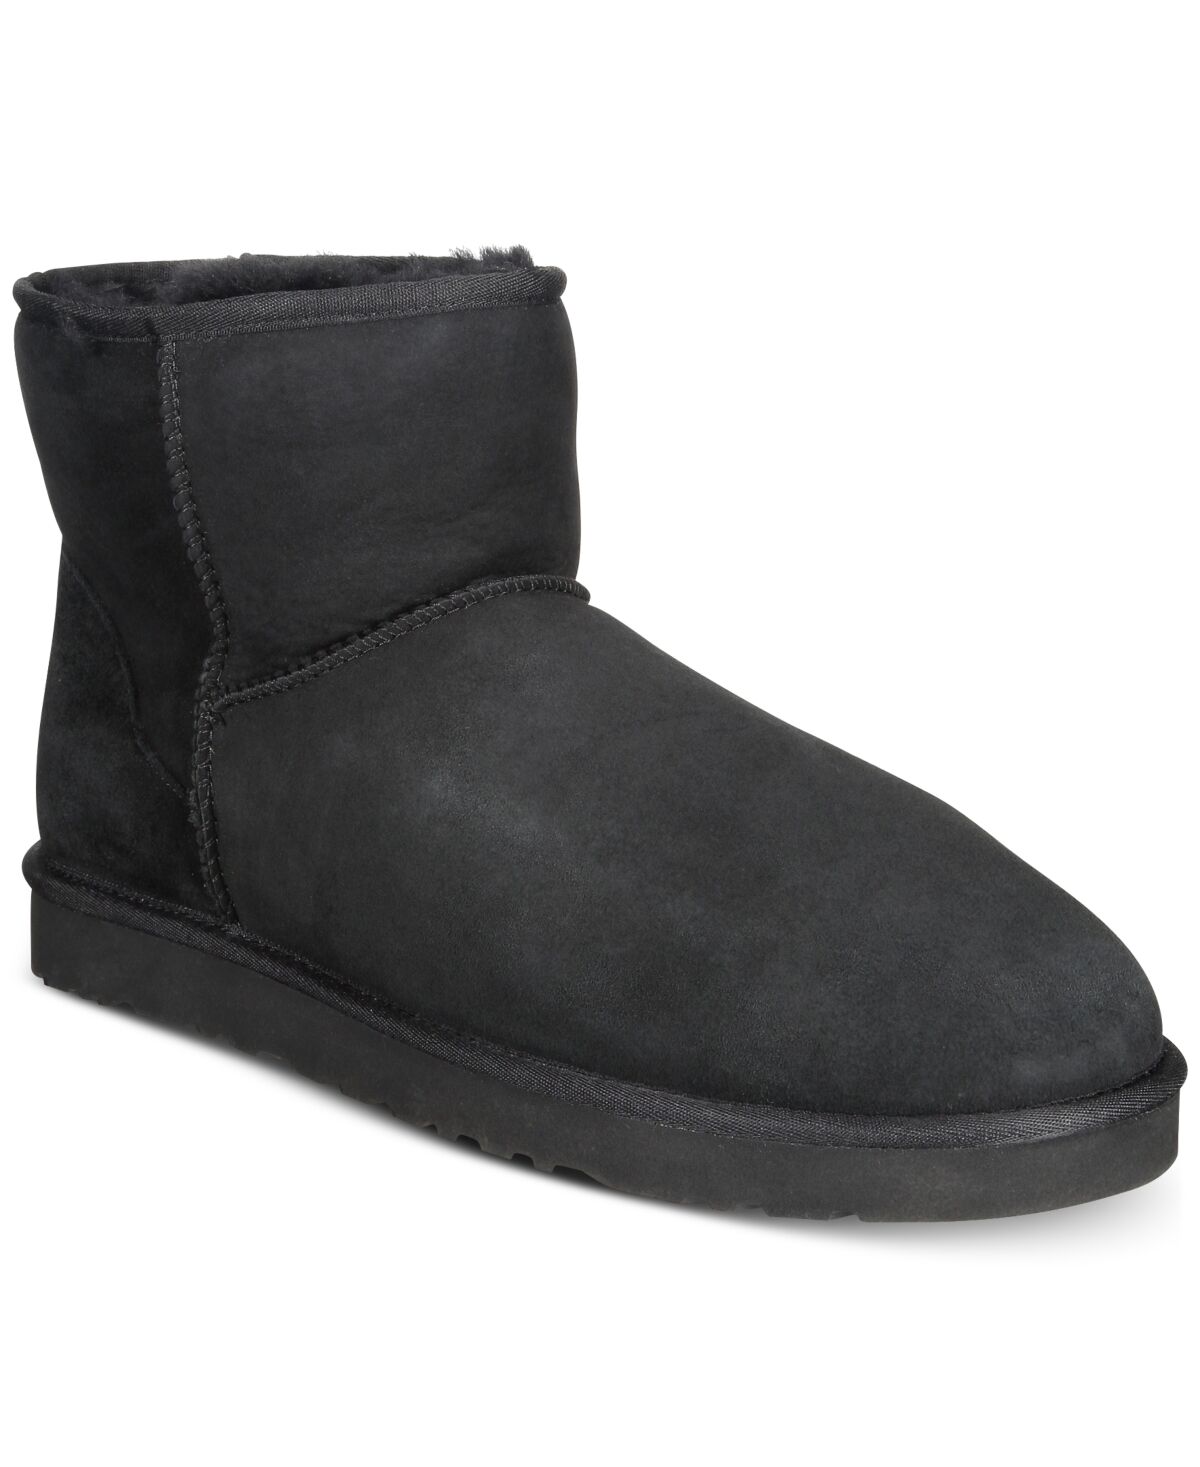 Ugg Men's Classic Mini Boots - Black